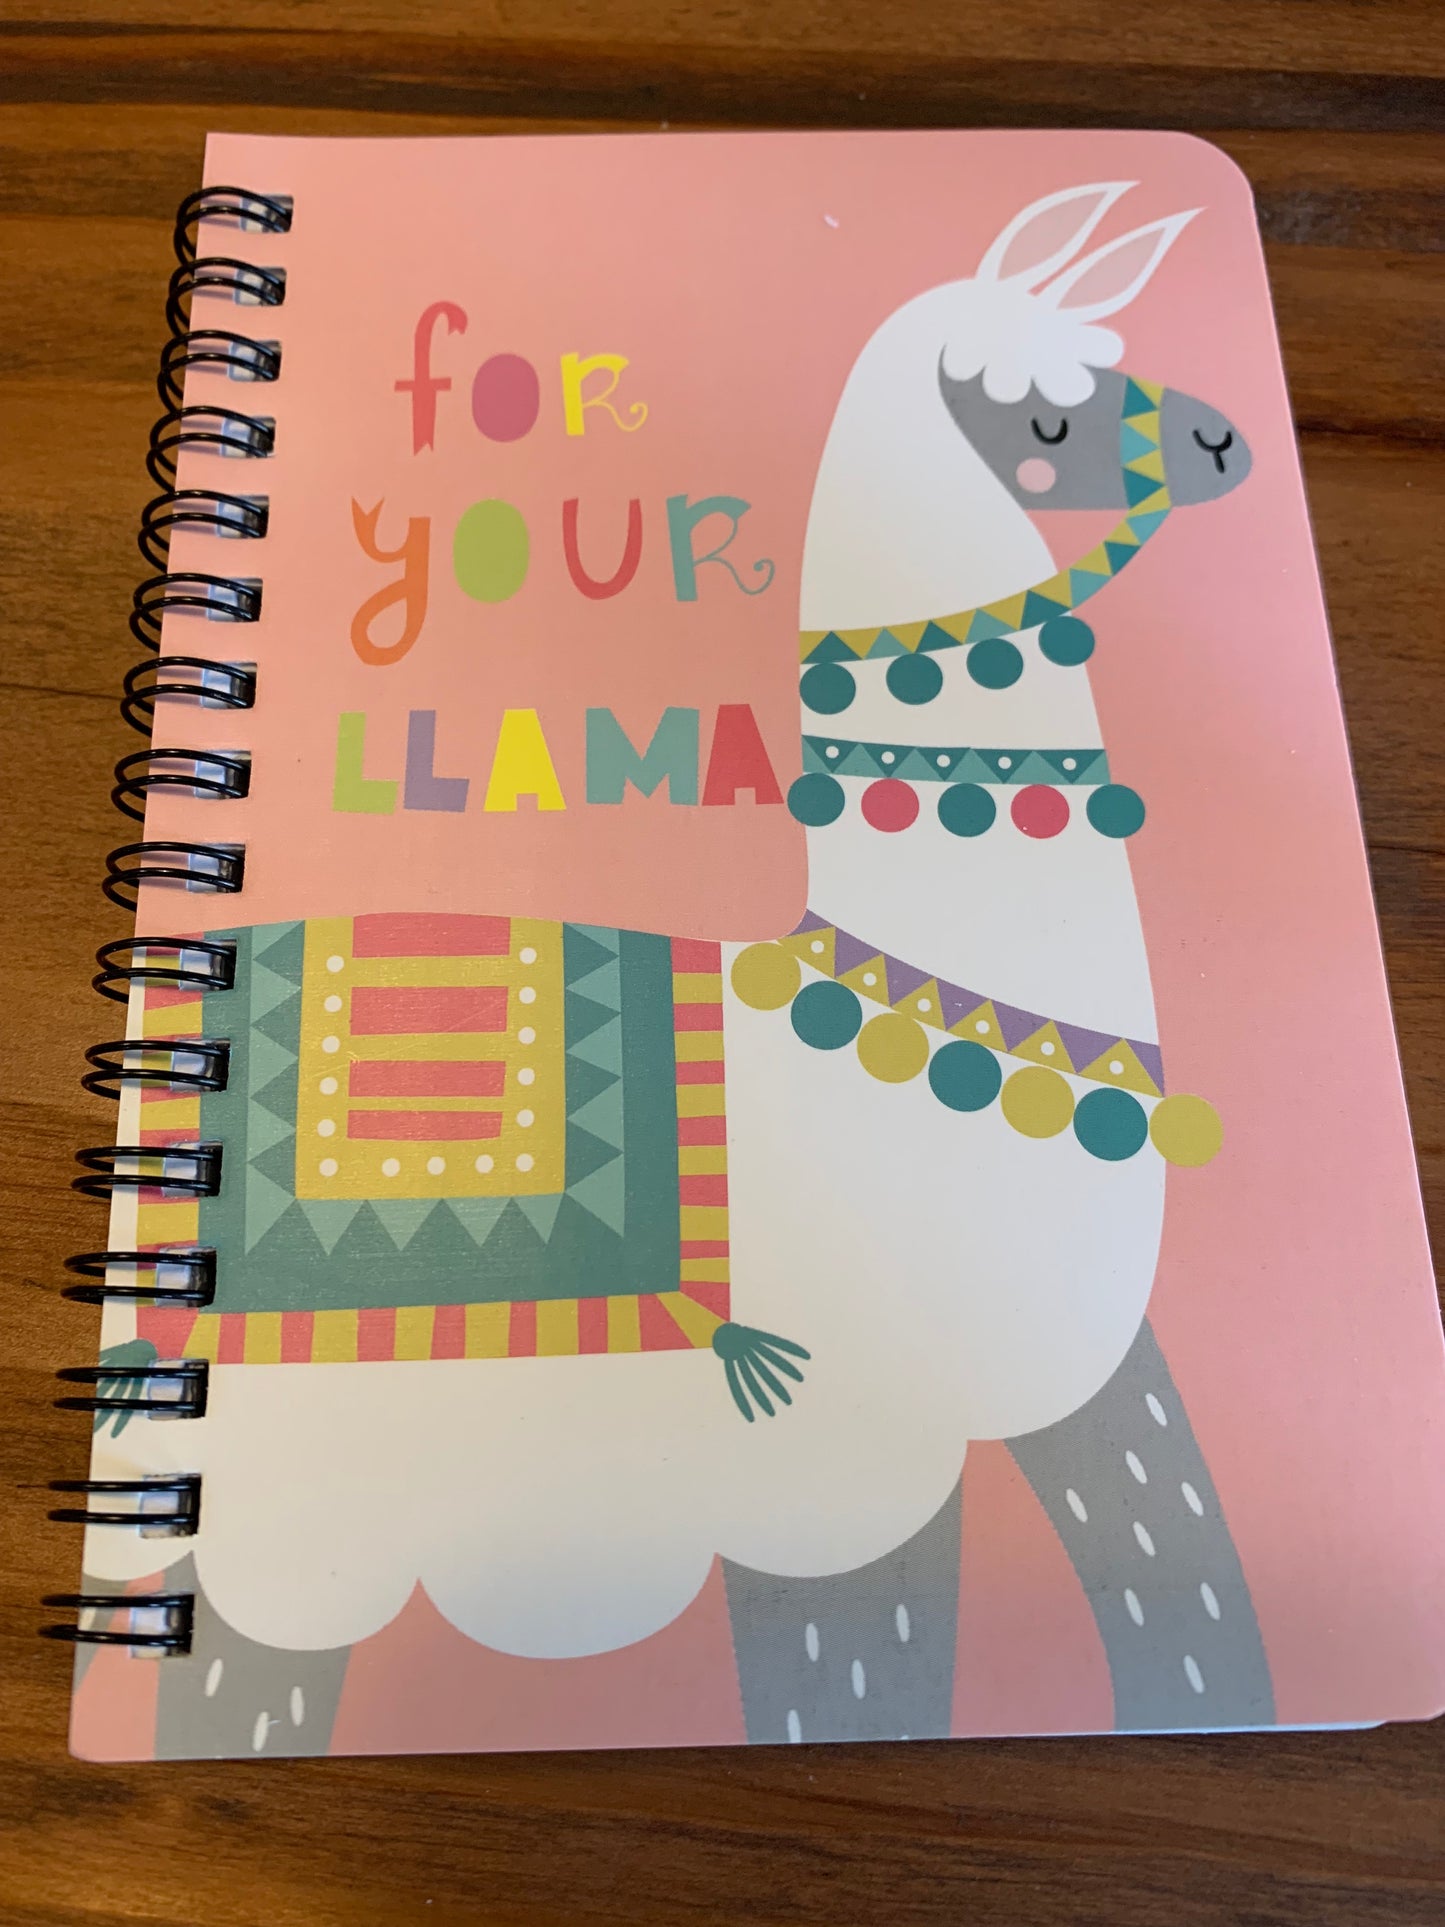 Llama Spiral Notebook 4x6"